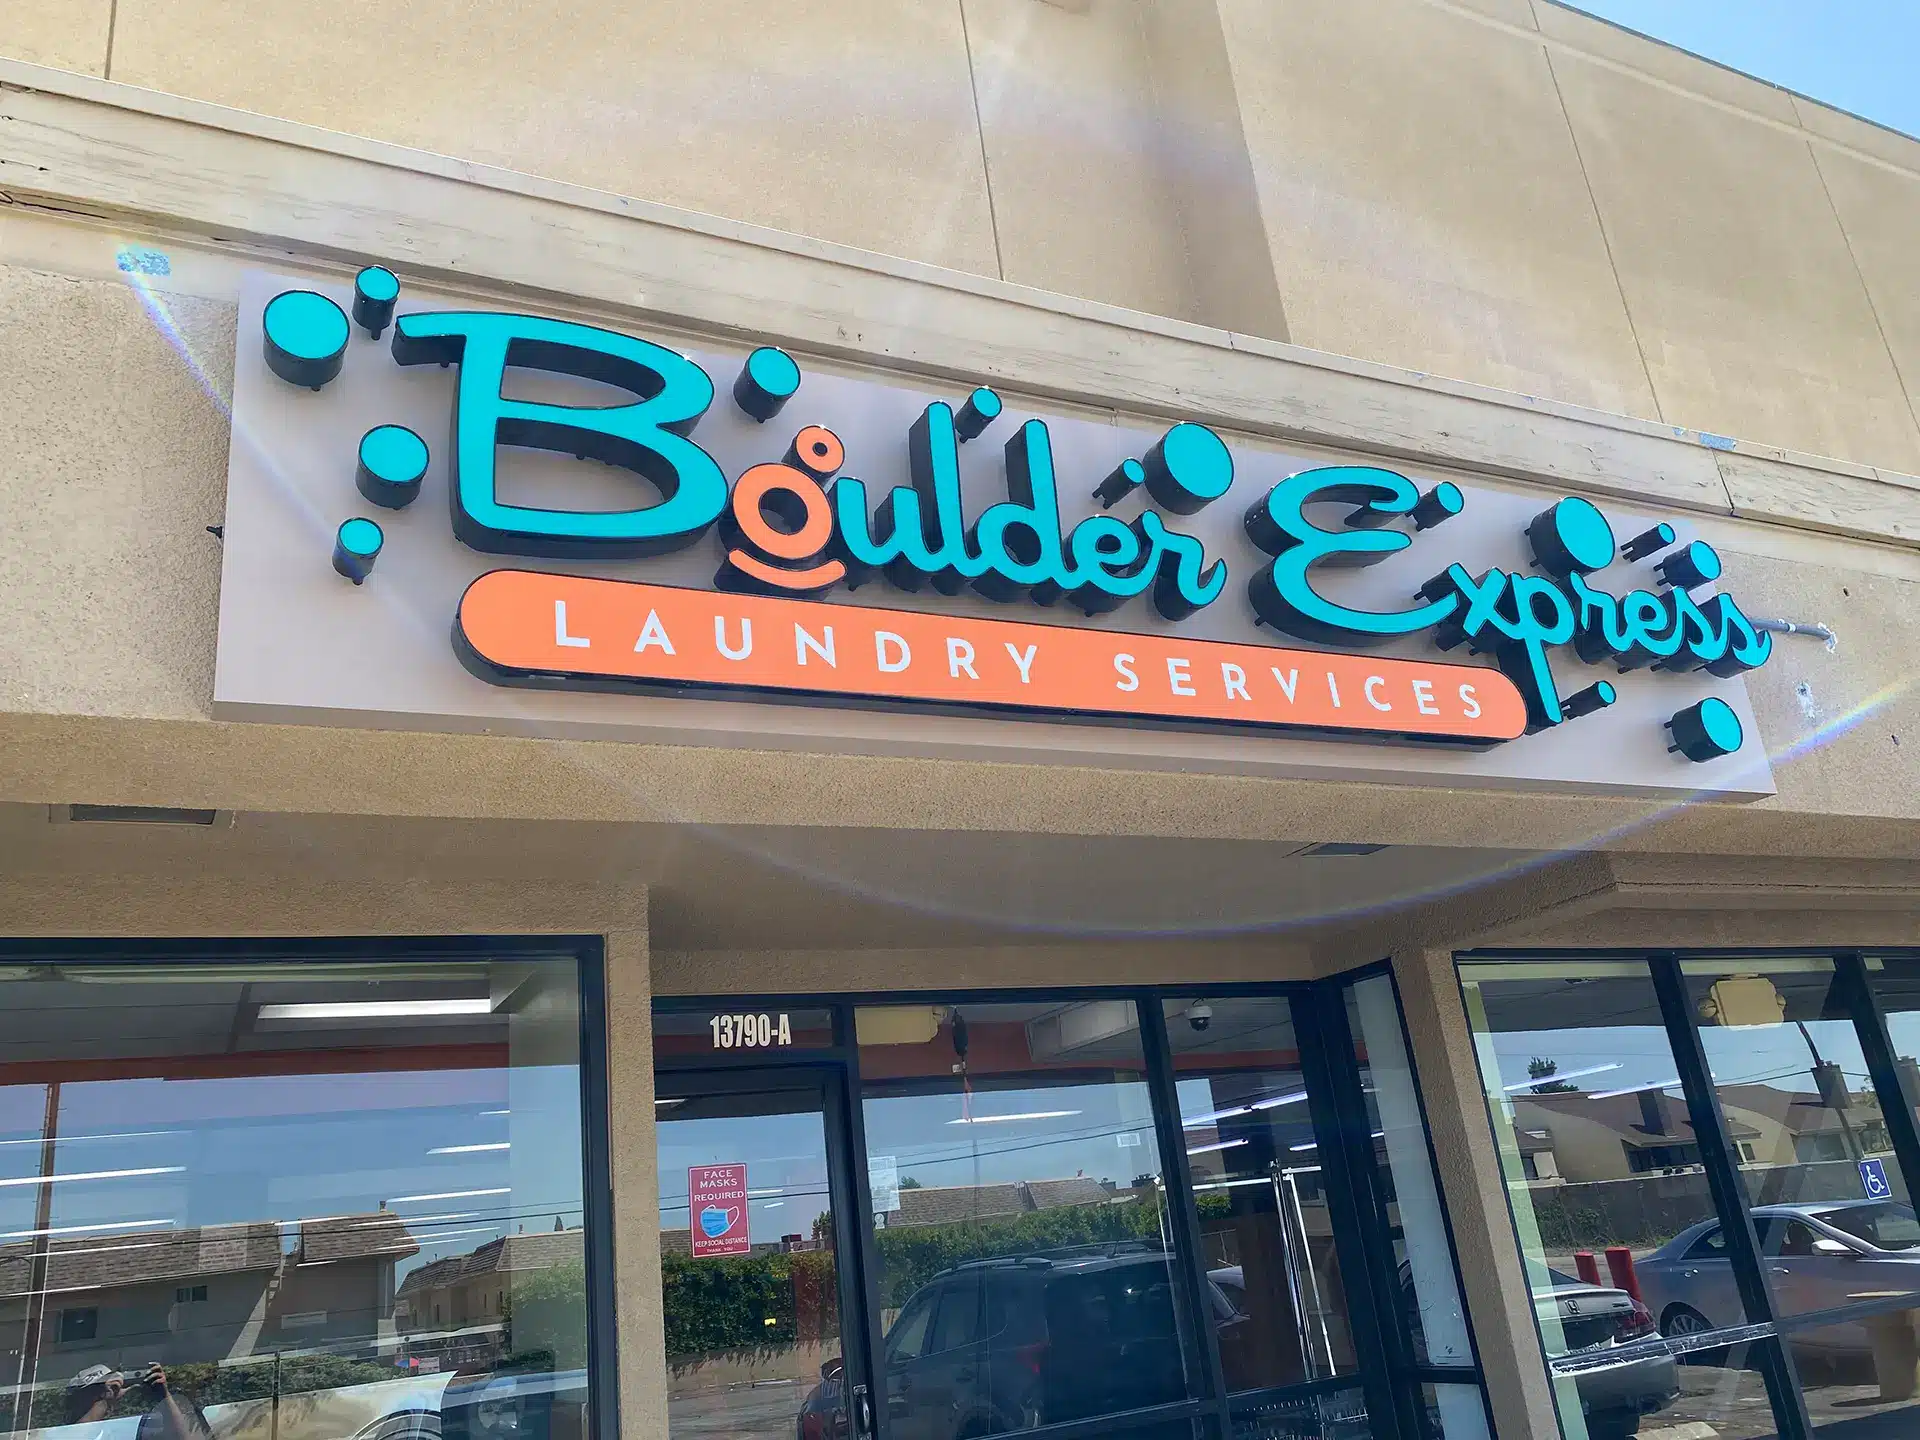 Boulder Express Laundry Services